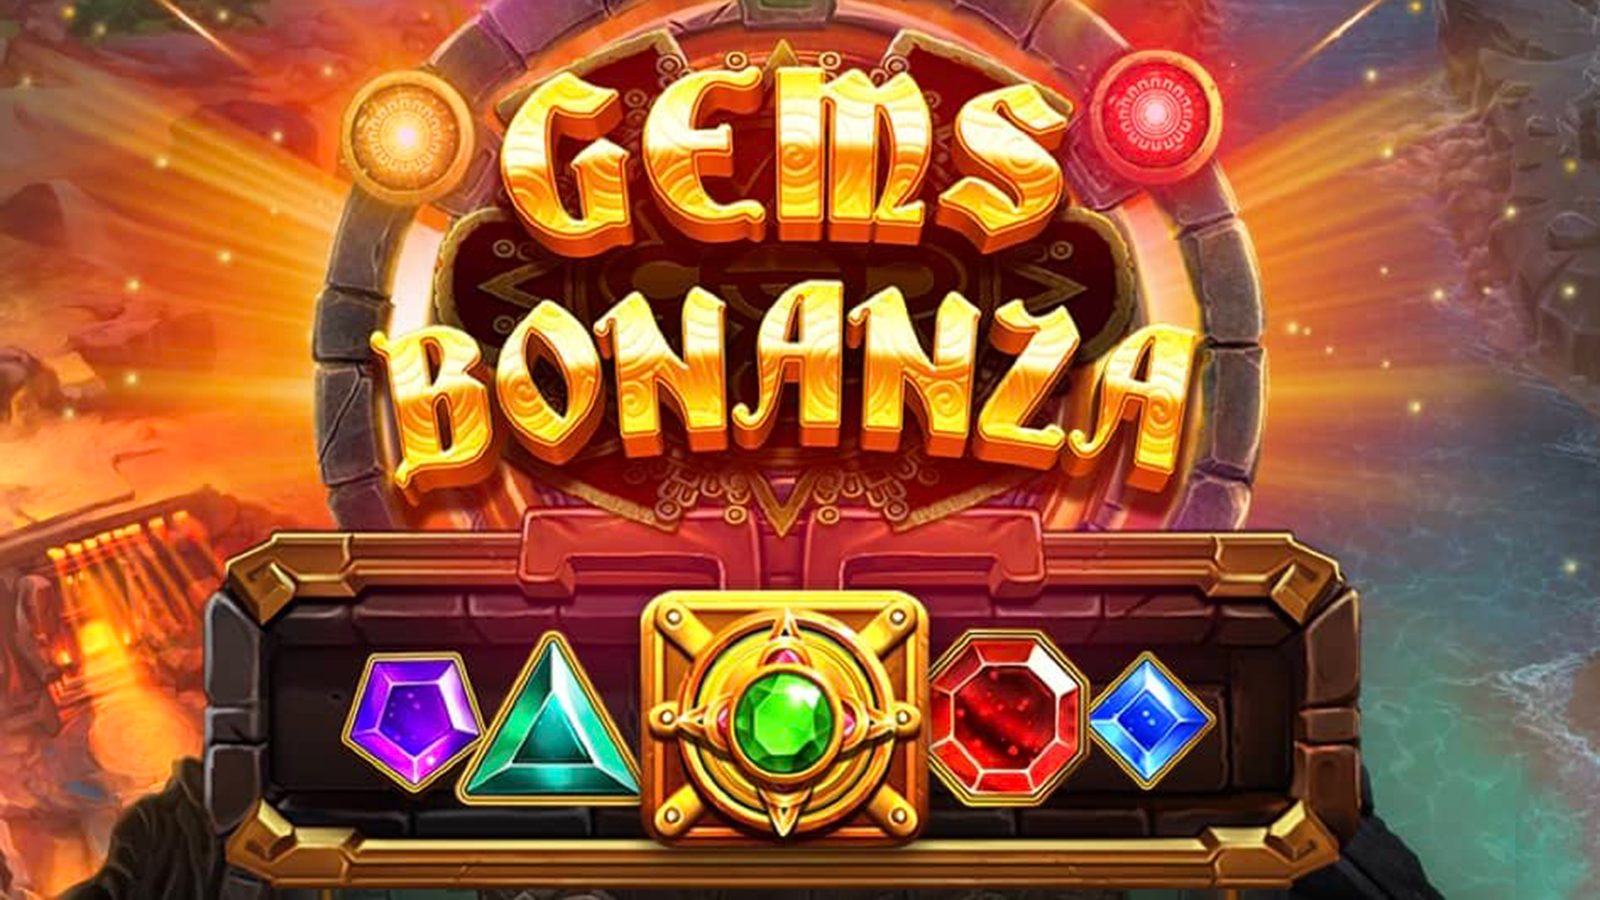 Pragmatic Play - Gems Bonanza Slot Game